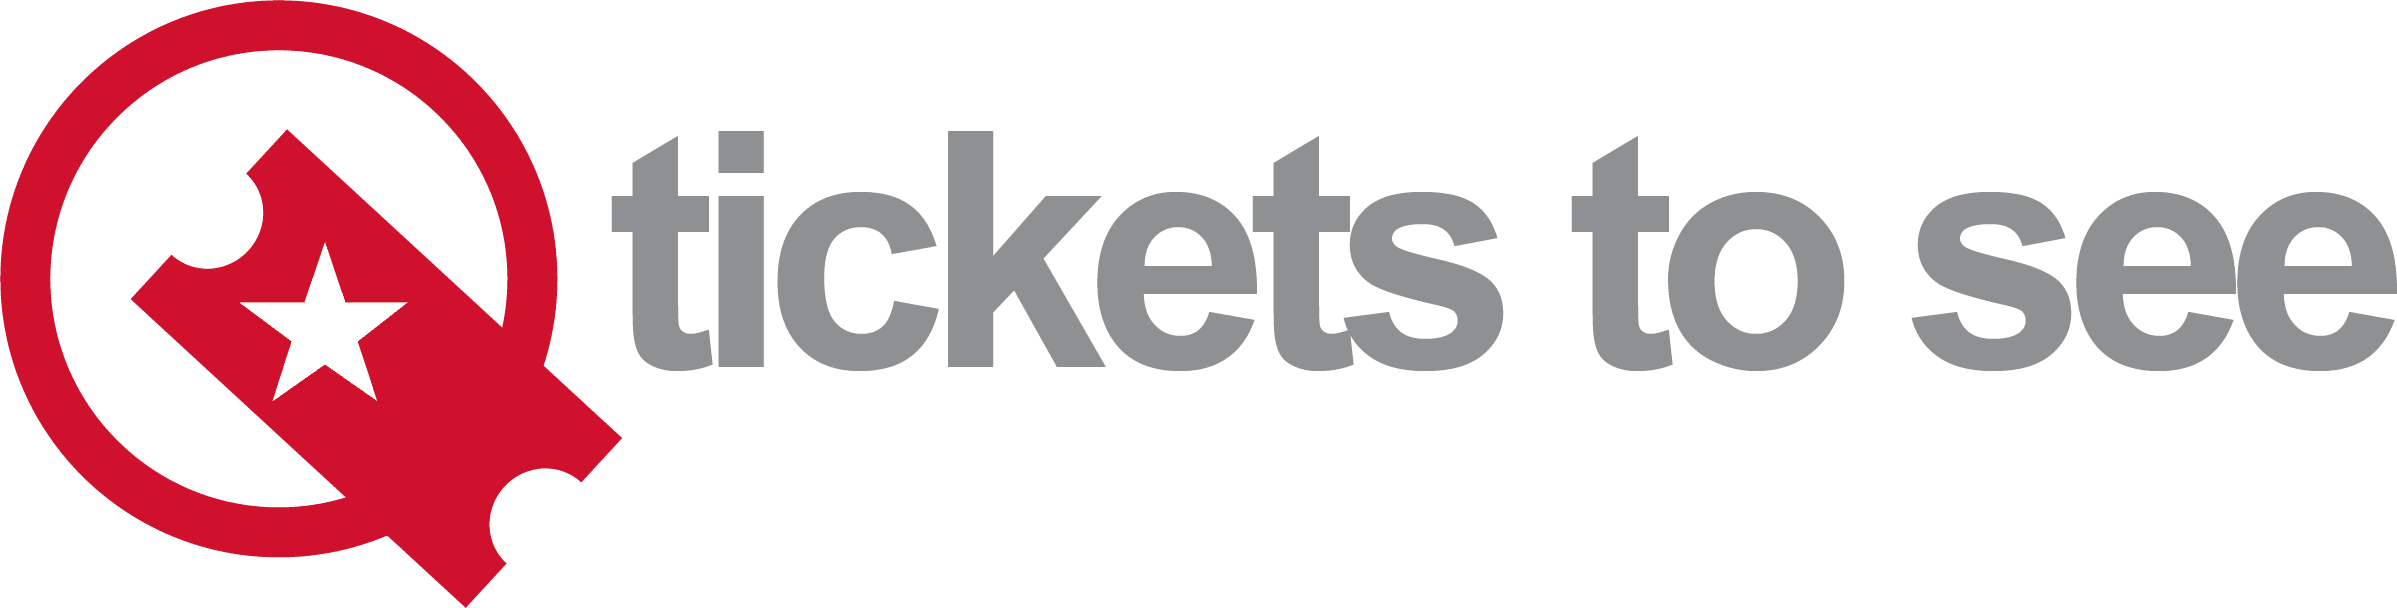 england v ireland tickets twickenham